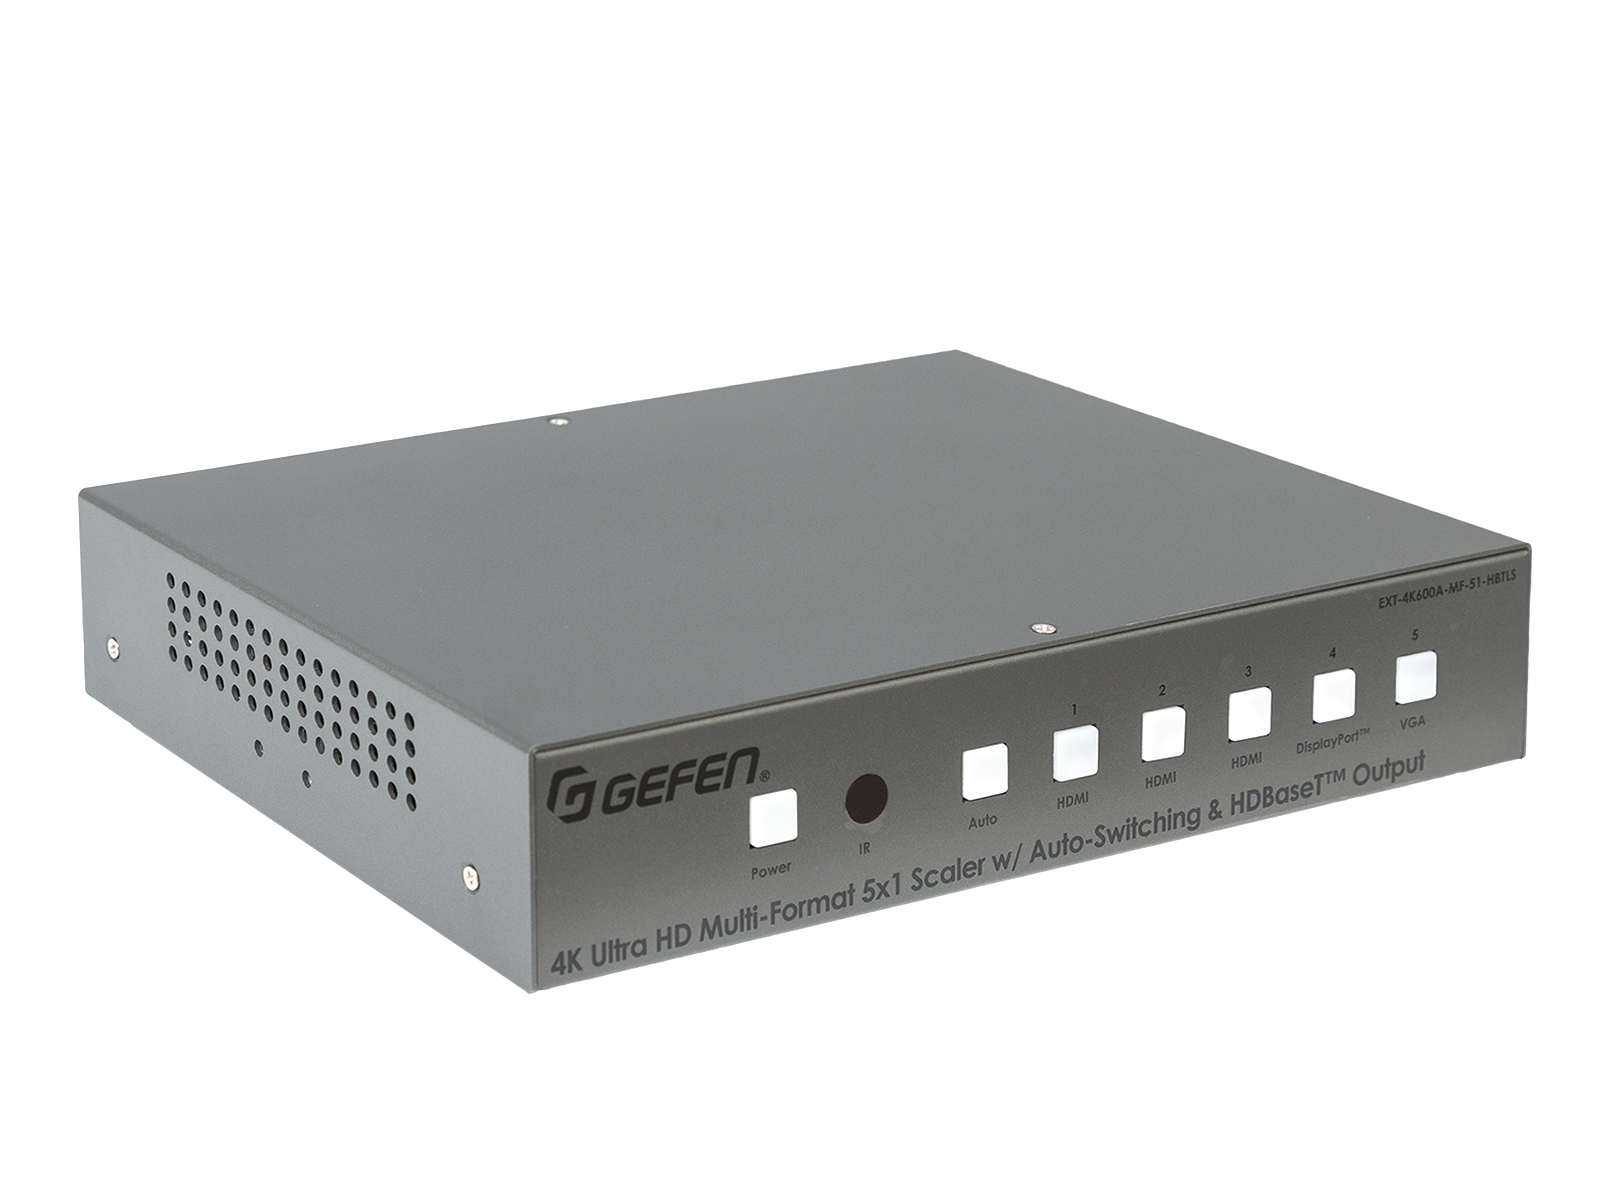 Gefen EXT-4K600A-MF-51-HBTLS 4K Ultra HDMI/DisplayPort/VGA 600 MHz Multi-Format 5x1 Scaler with Auto-Switching/HDBaseT Outputs